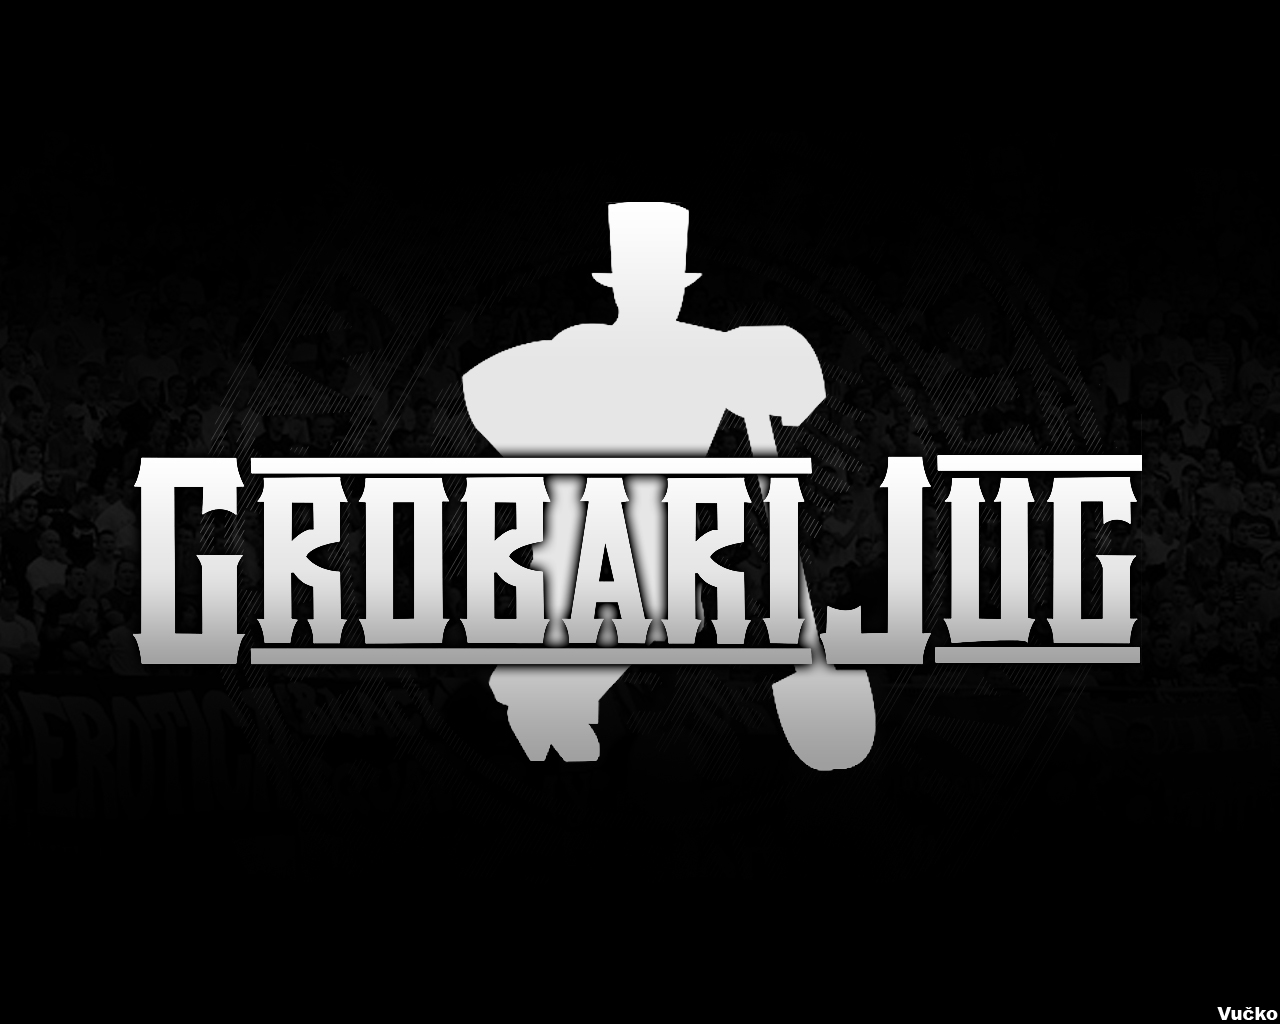 Grobari_Jug_by_vucko61.jpg